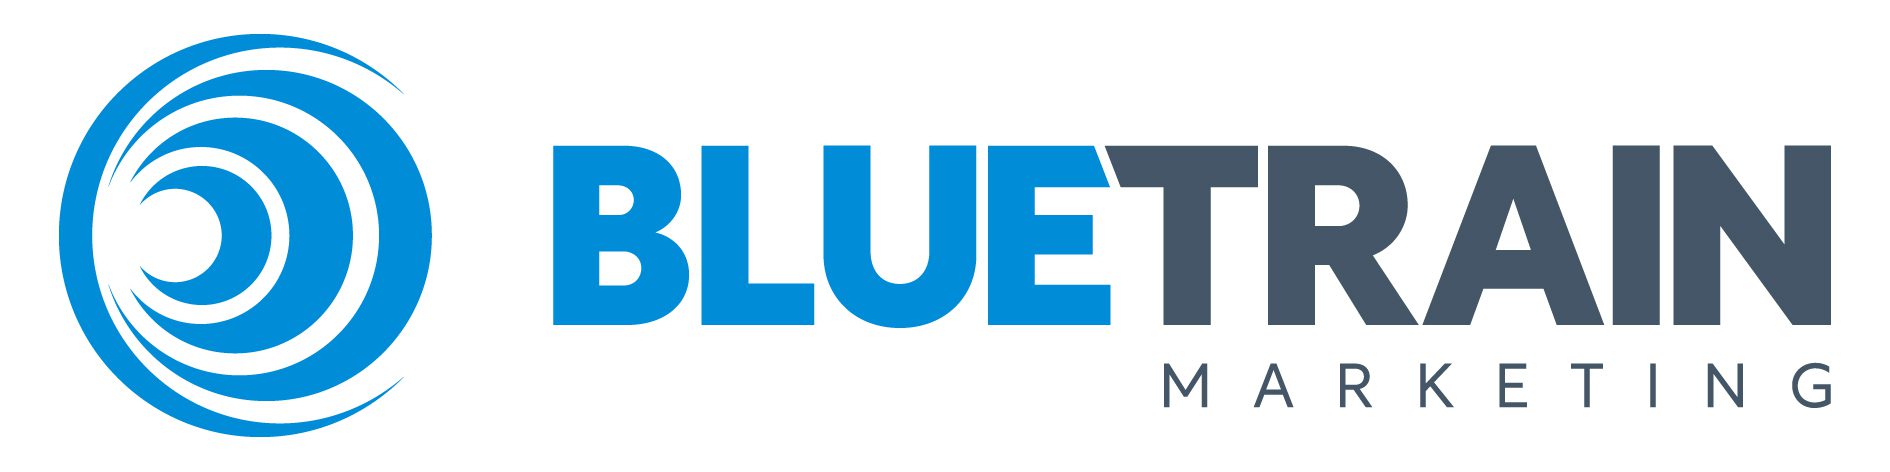 Bluetrain_Logo_Master